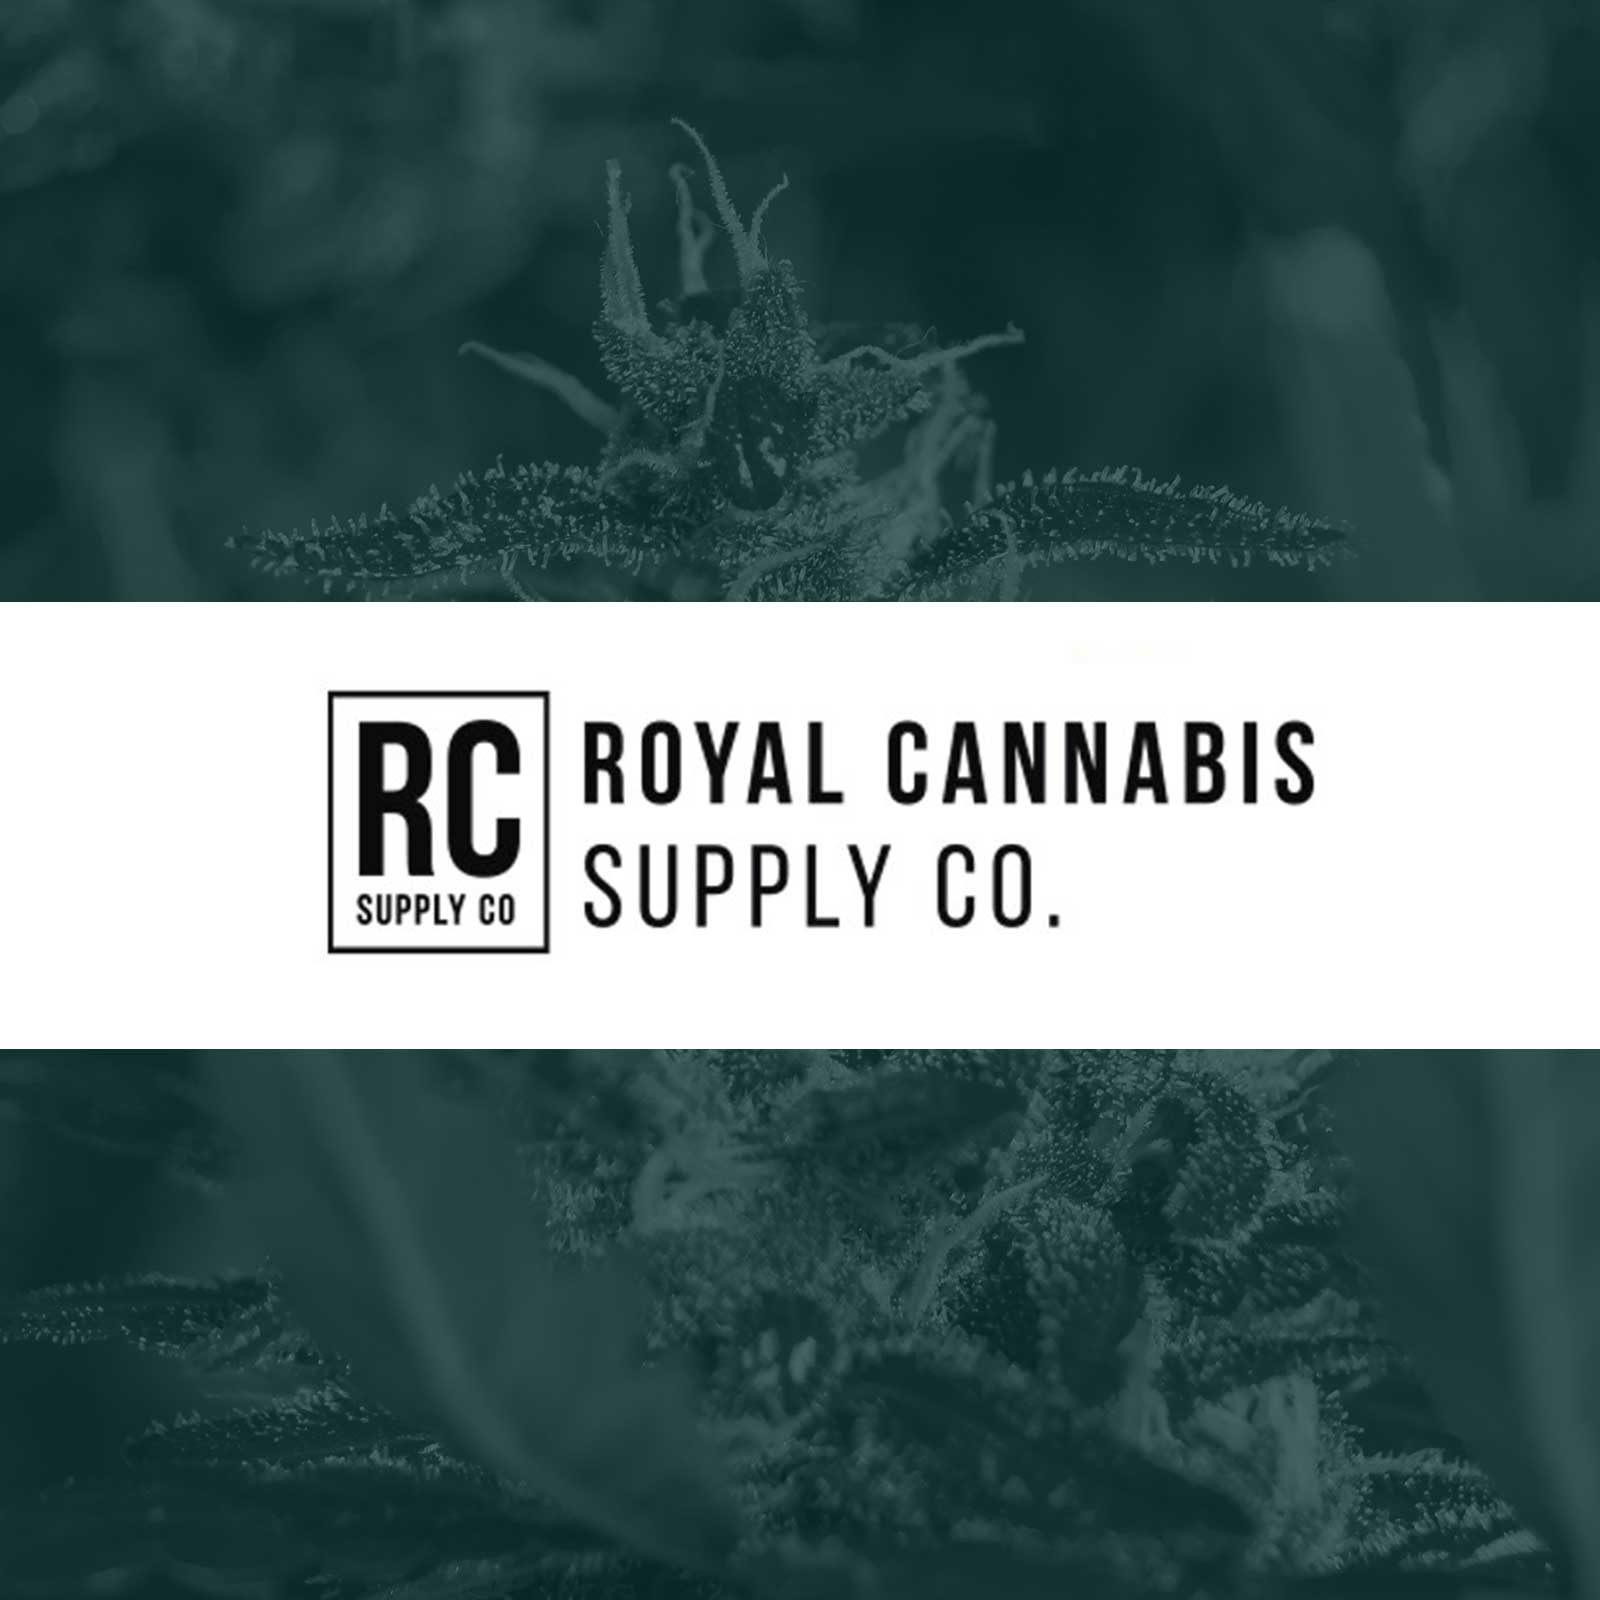 Royal Cannabis Supply Co.